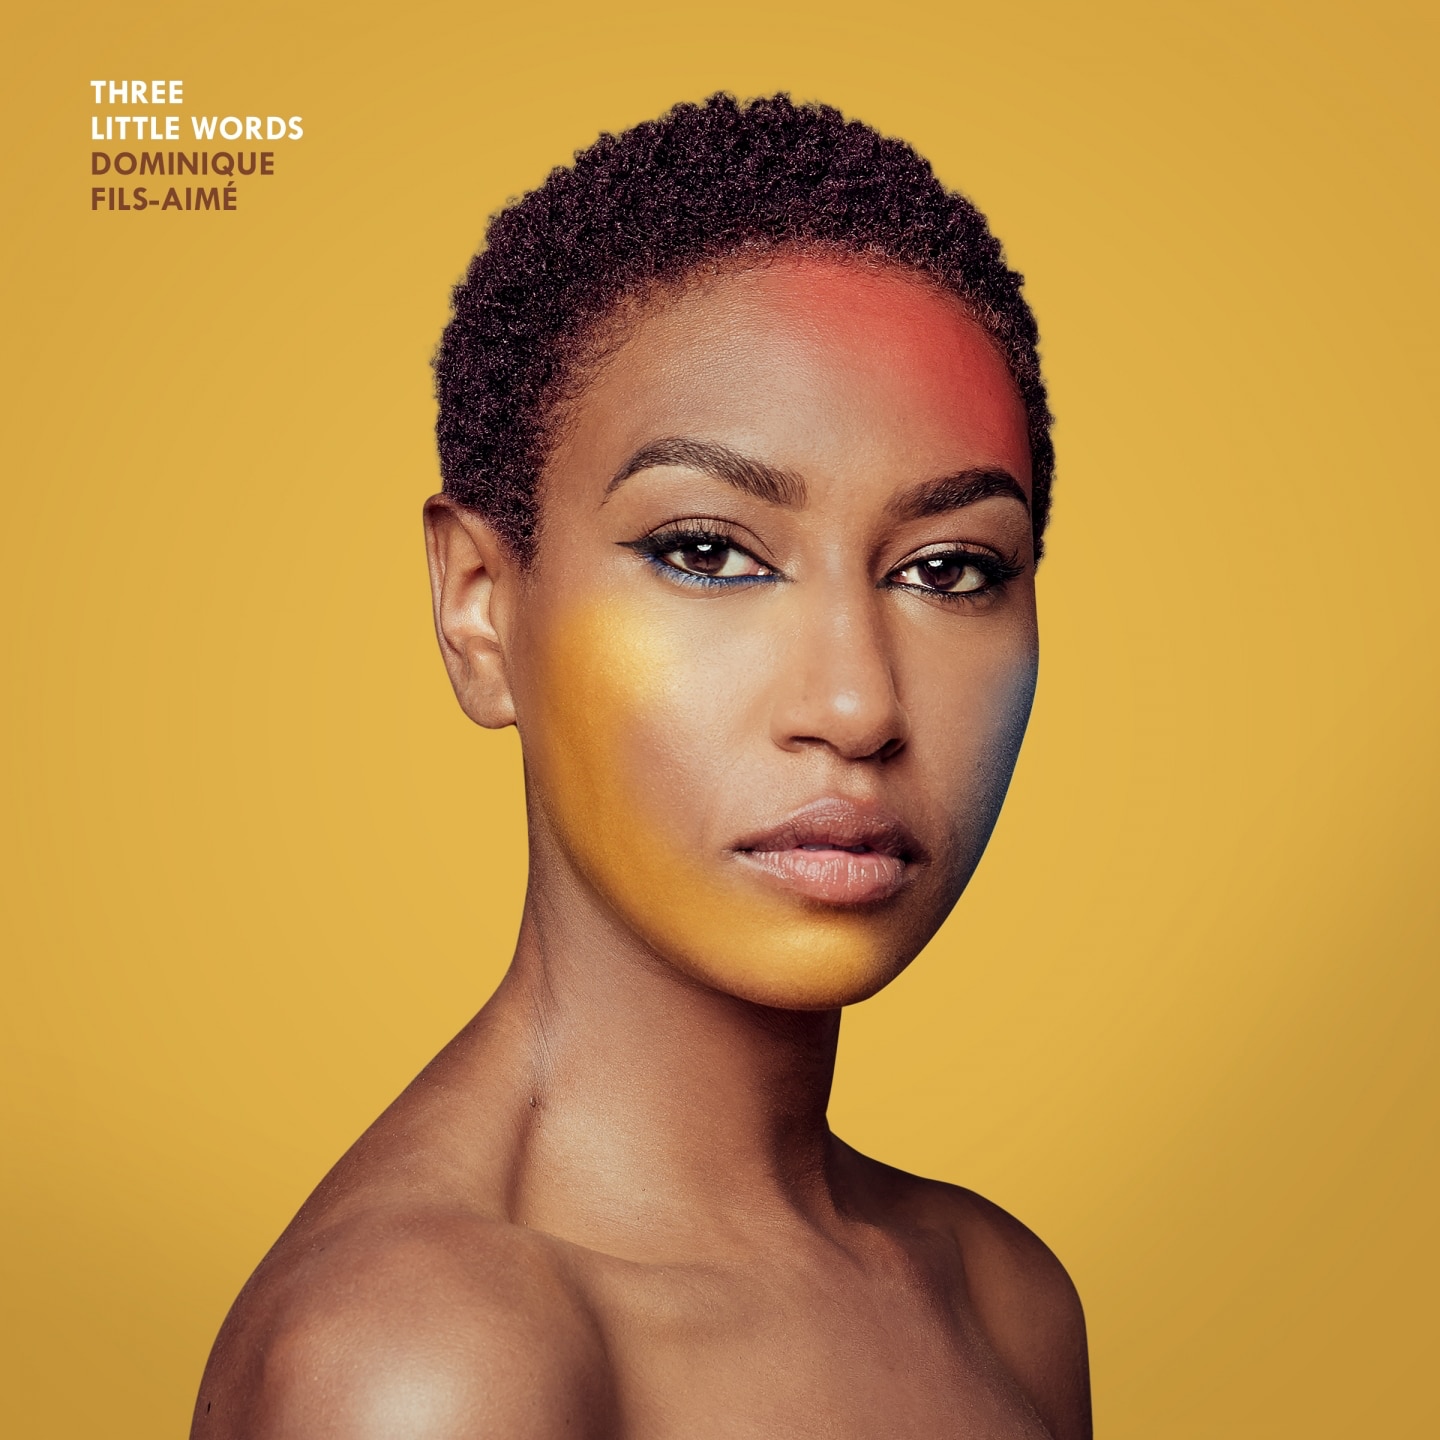 The cover for Dominique Fils-Aimé's album, Three Little Words